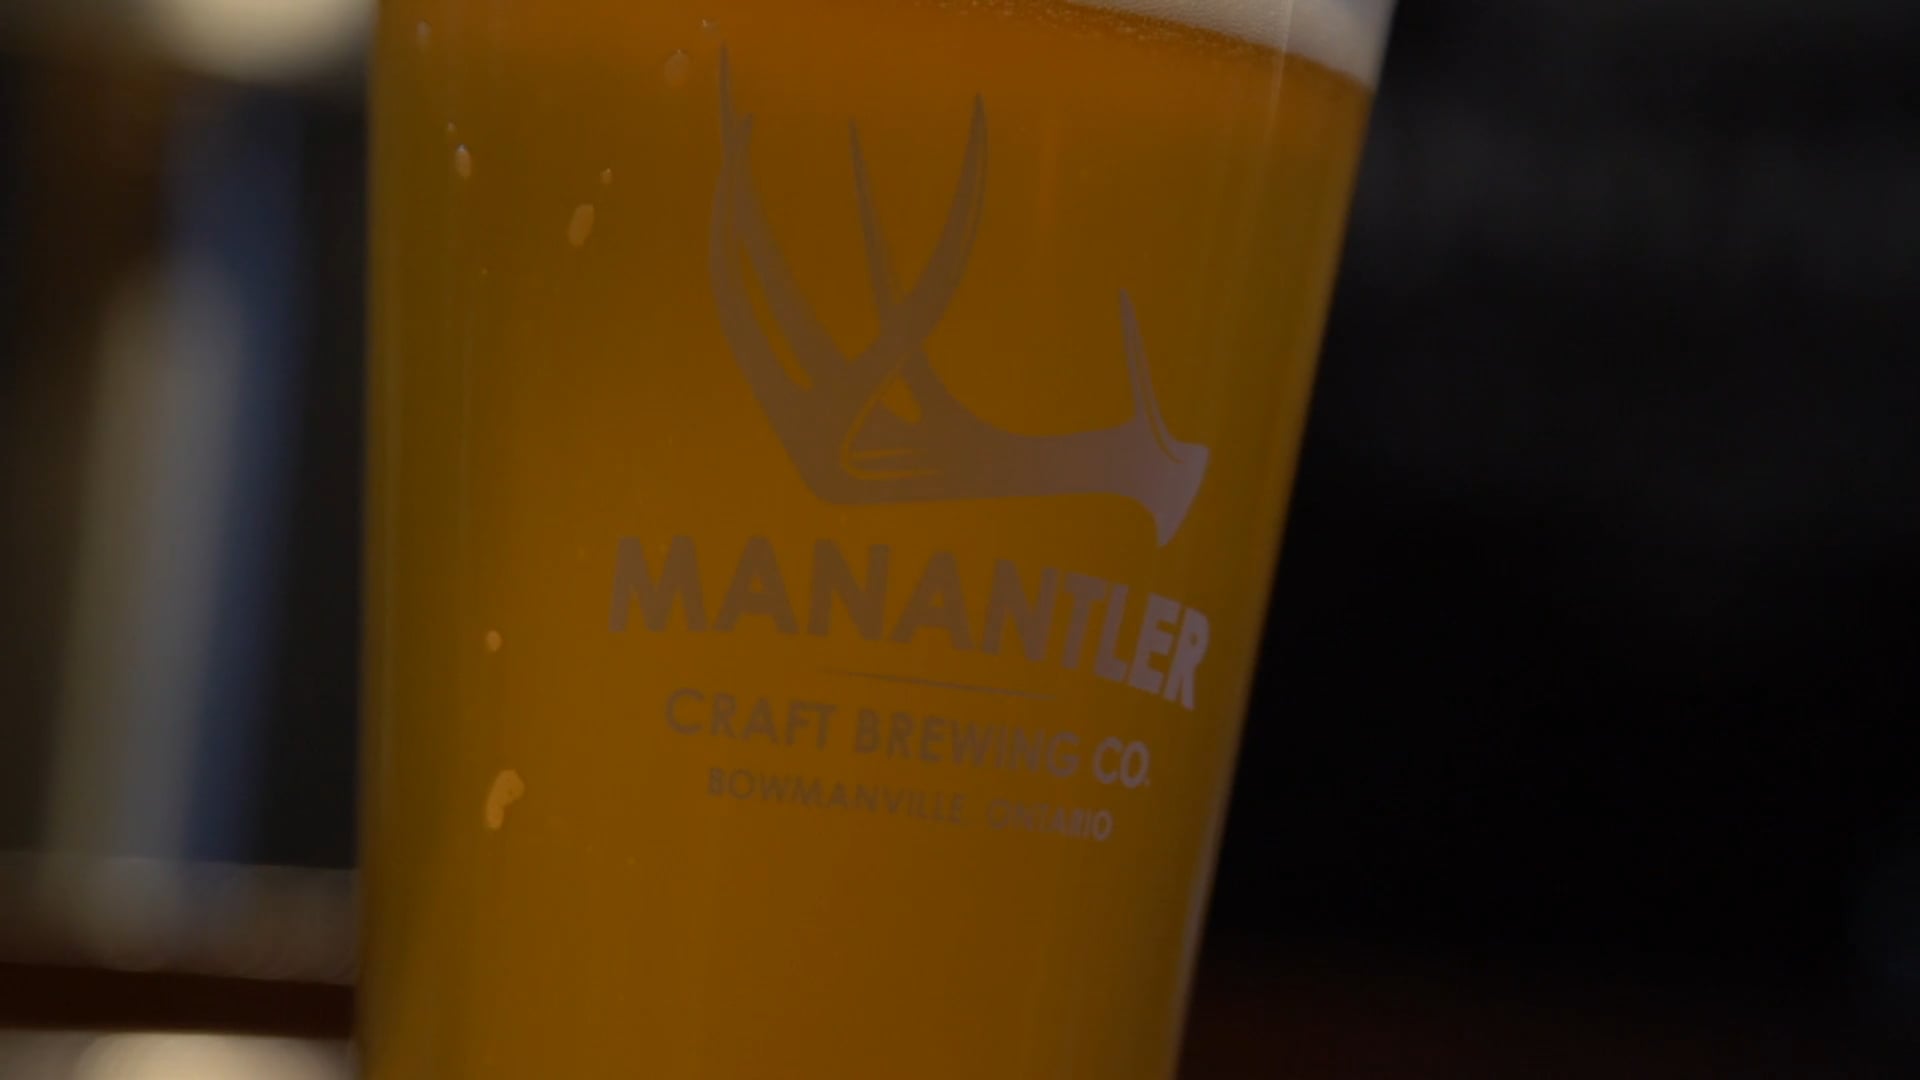 Manantler Craft Beer - Jack Astor's Whitby